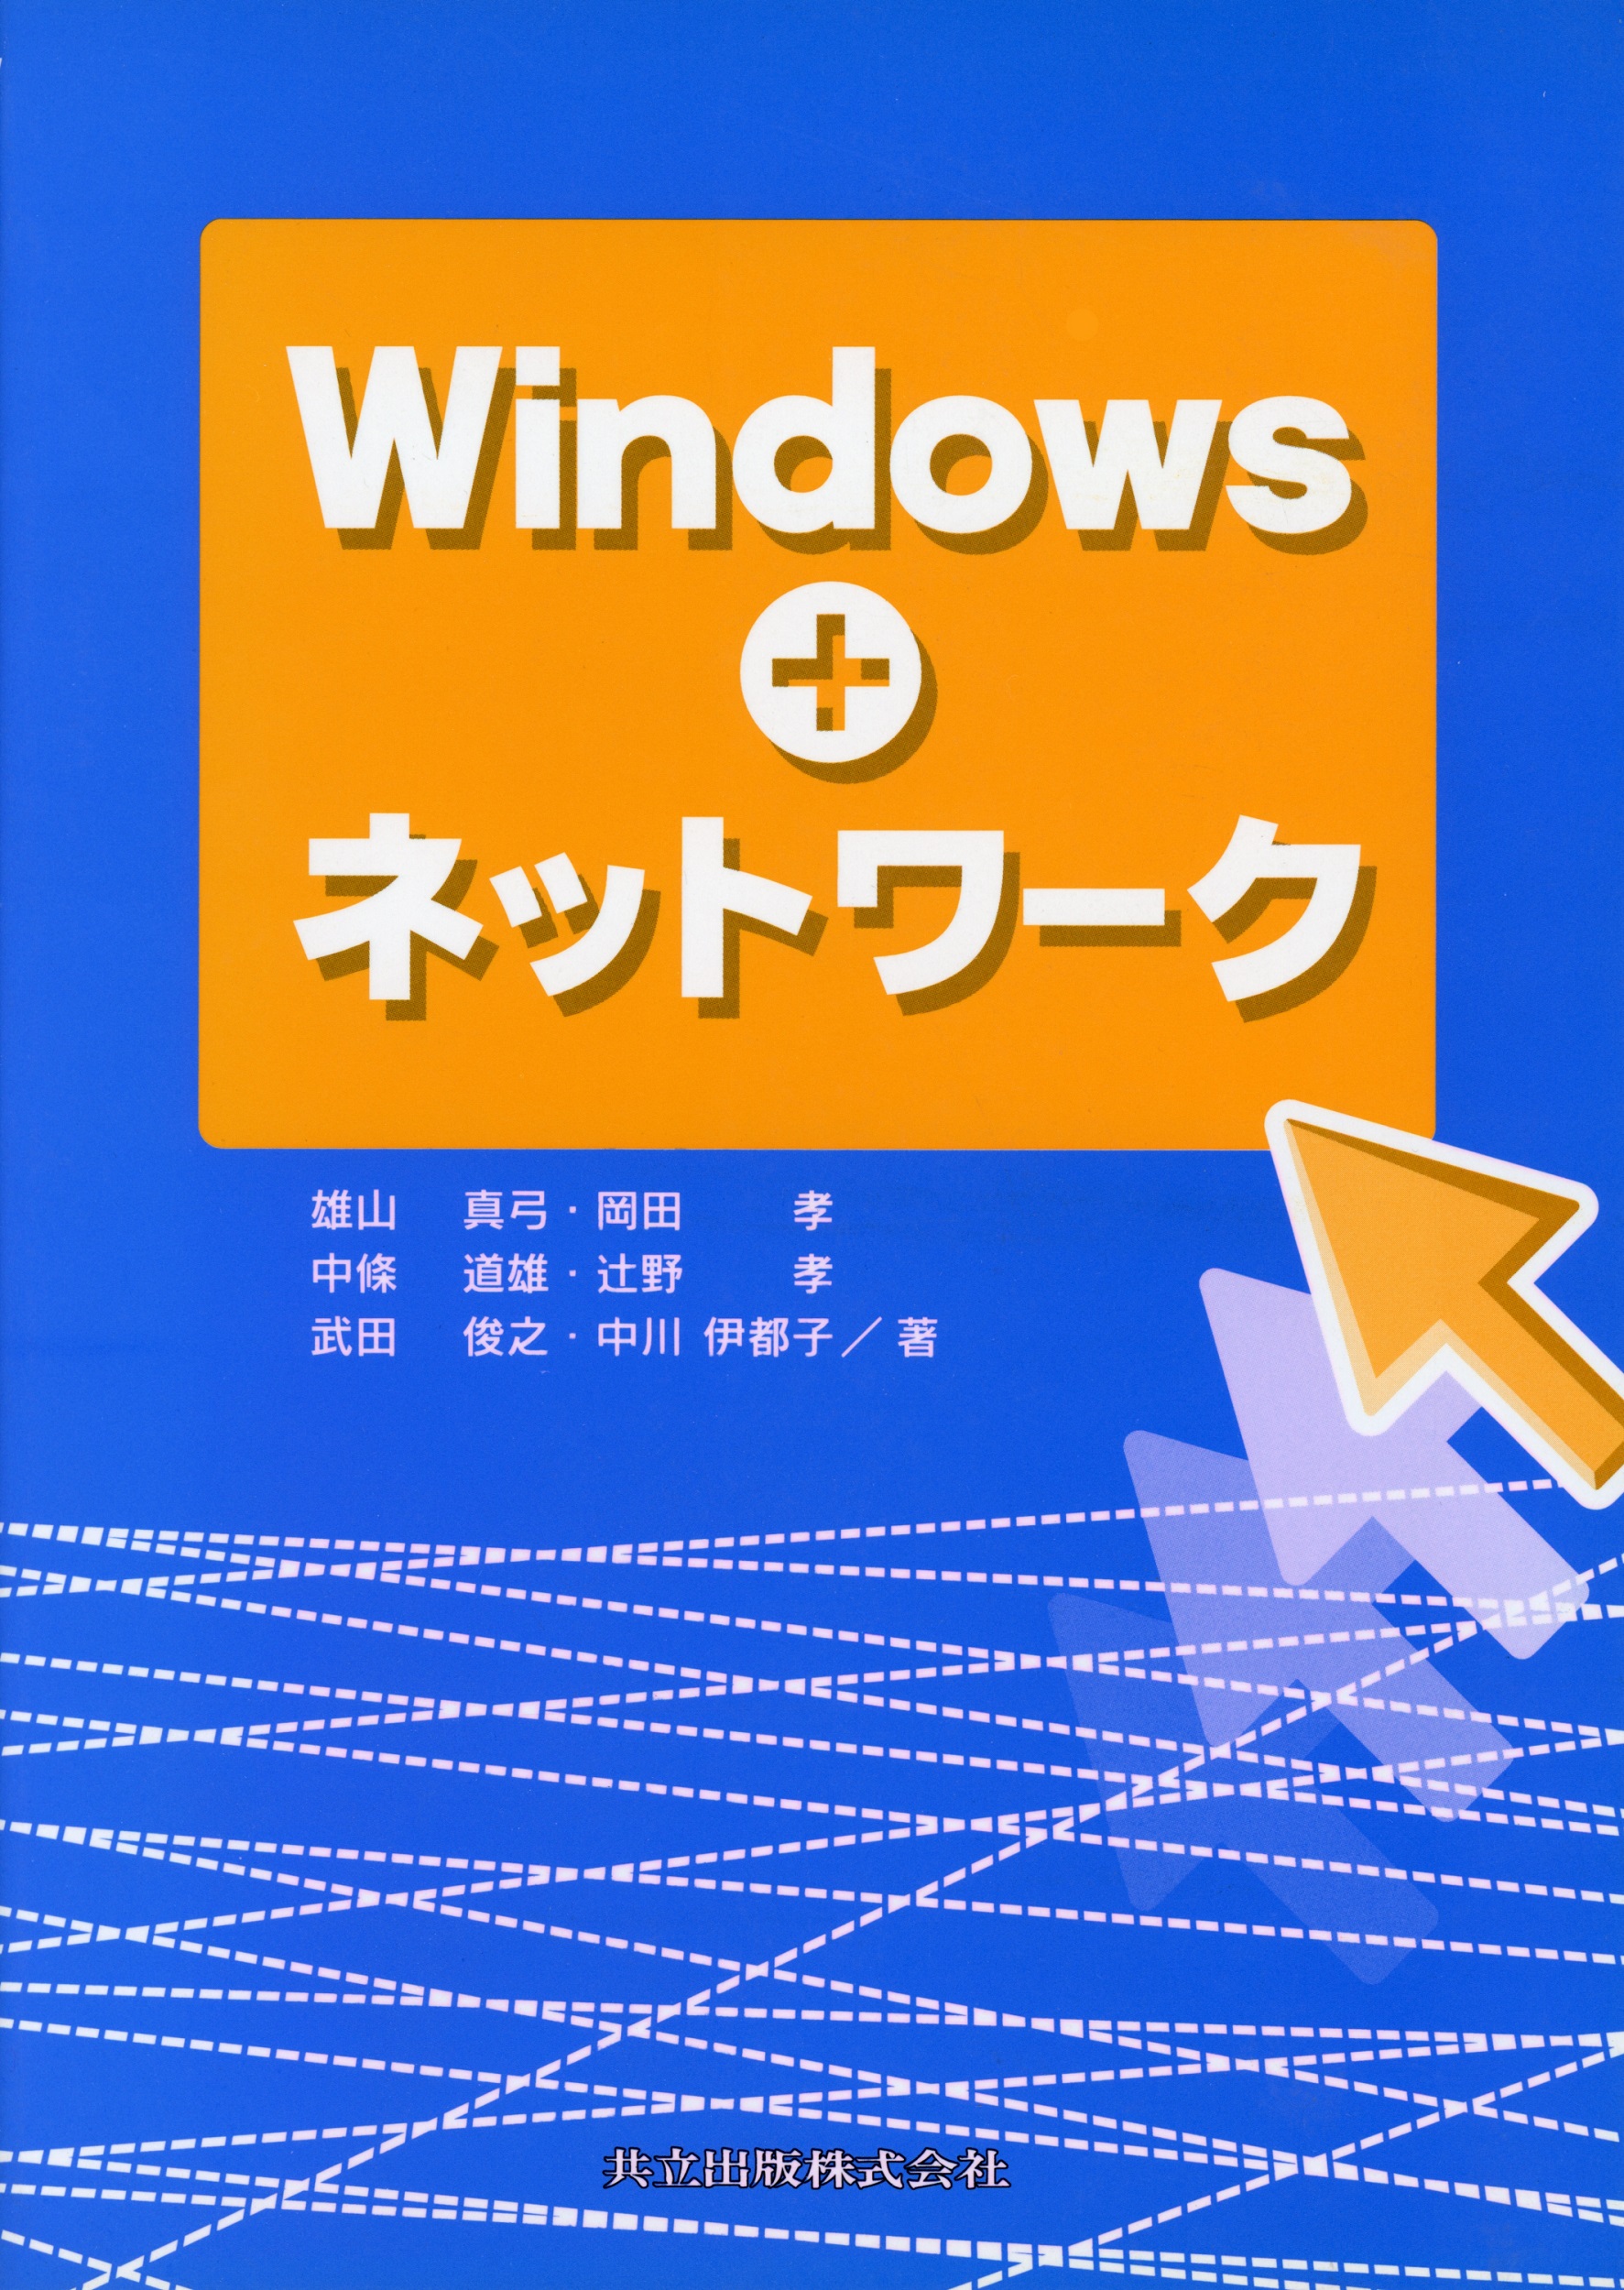 Windows＋ネットワークの商品画像